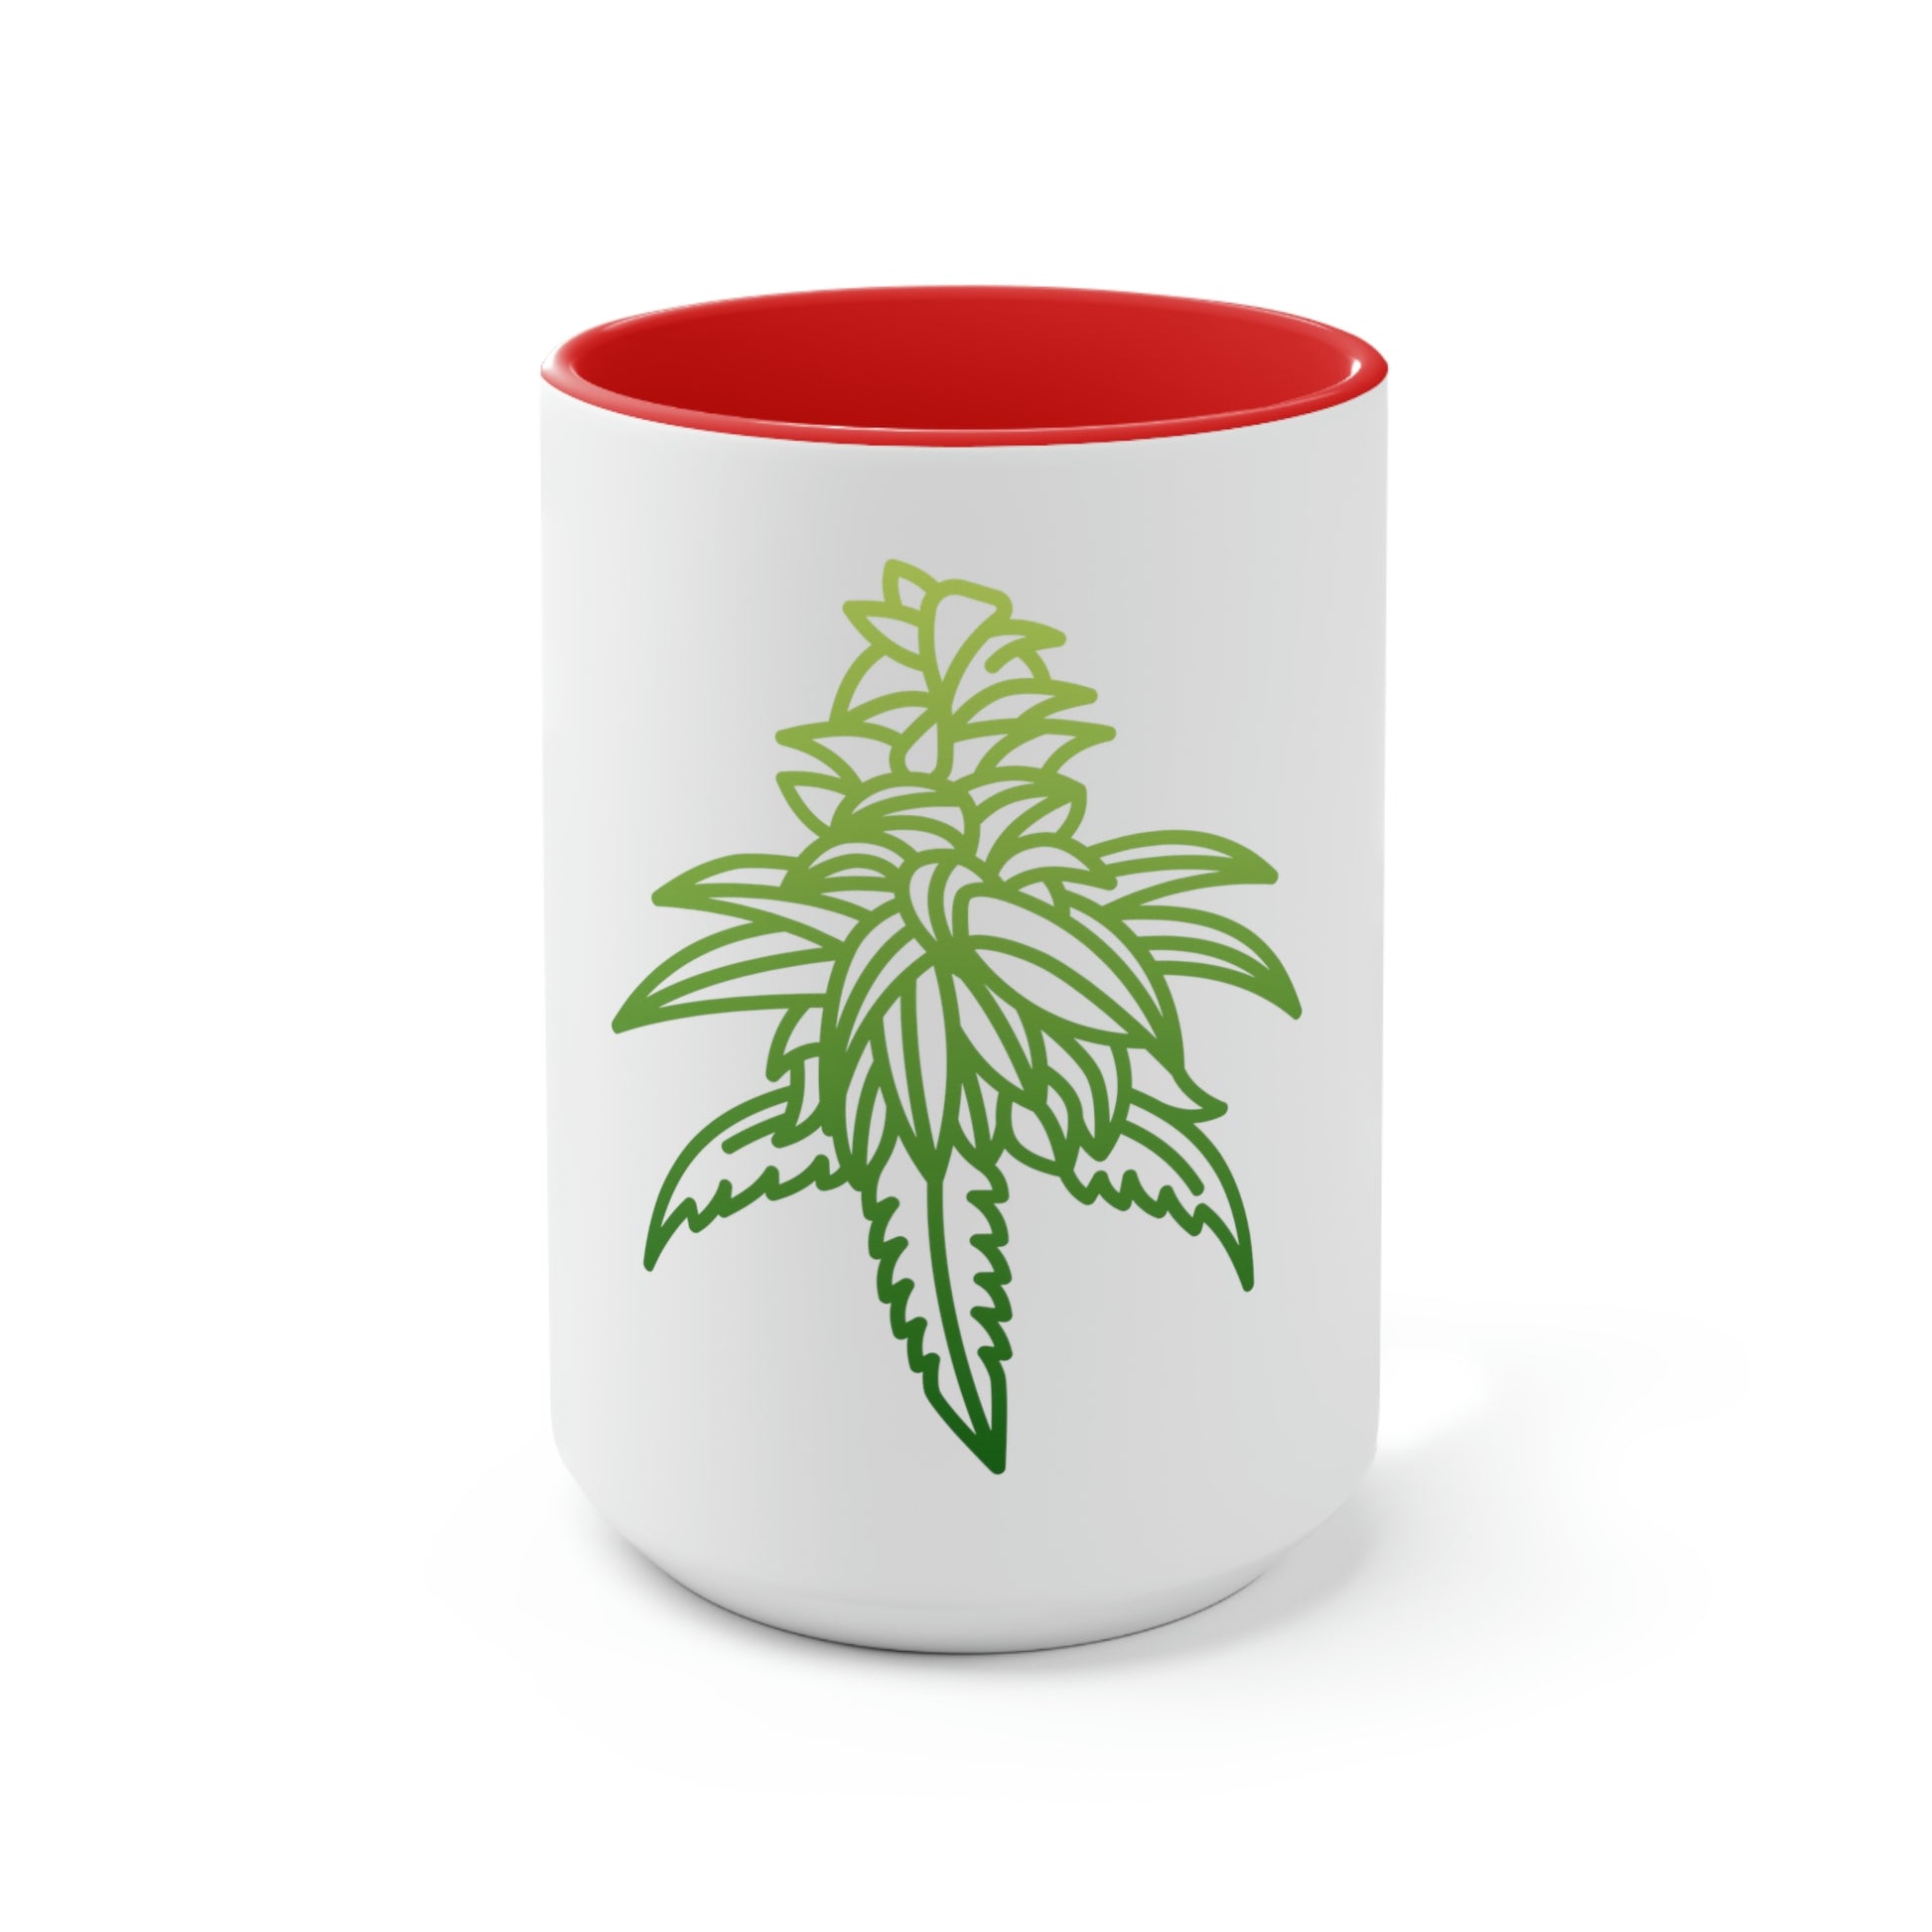 a Sour Diesel Cannabis Tea Mug with a marijuana leaf on it.